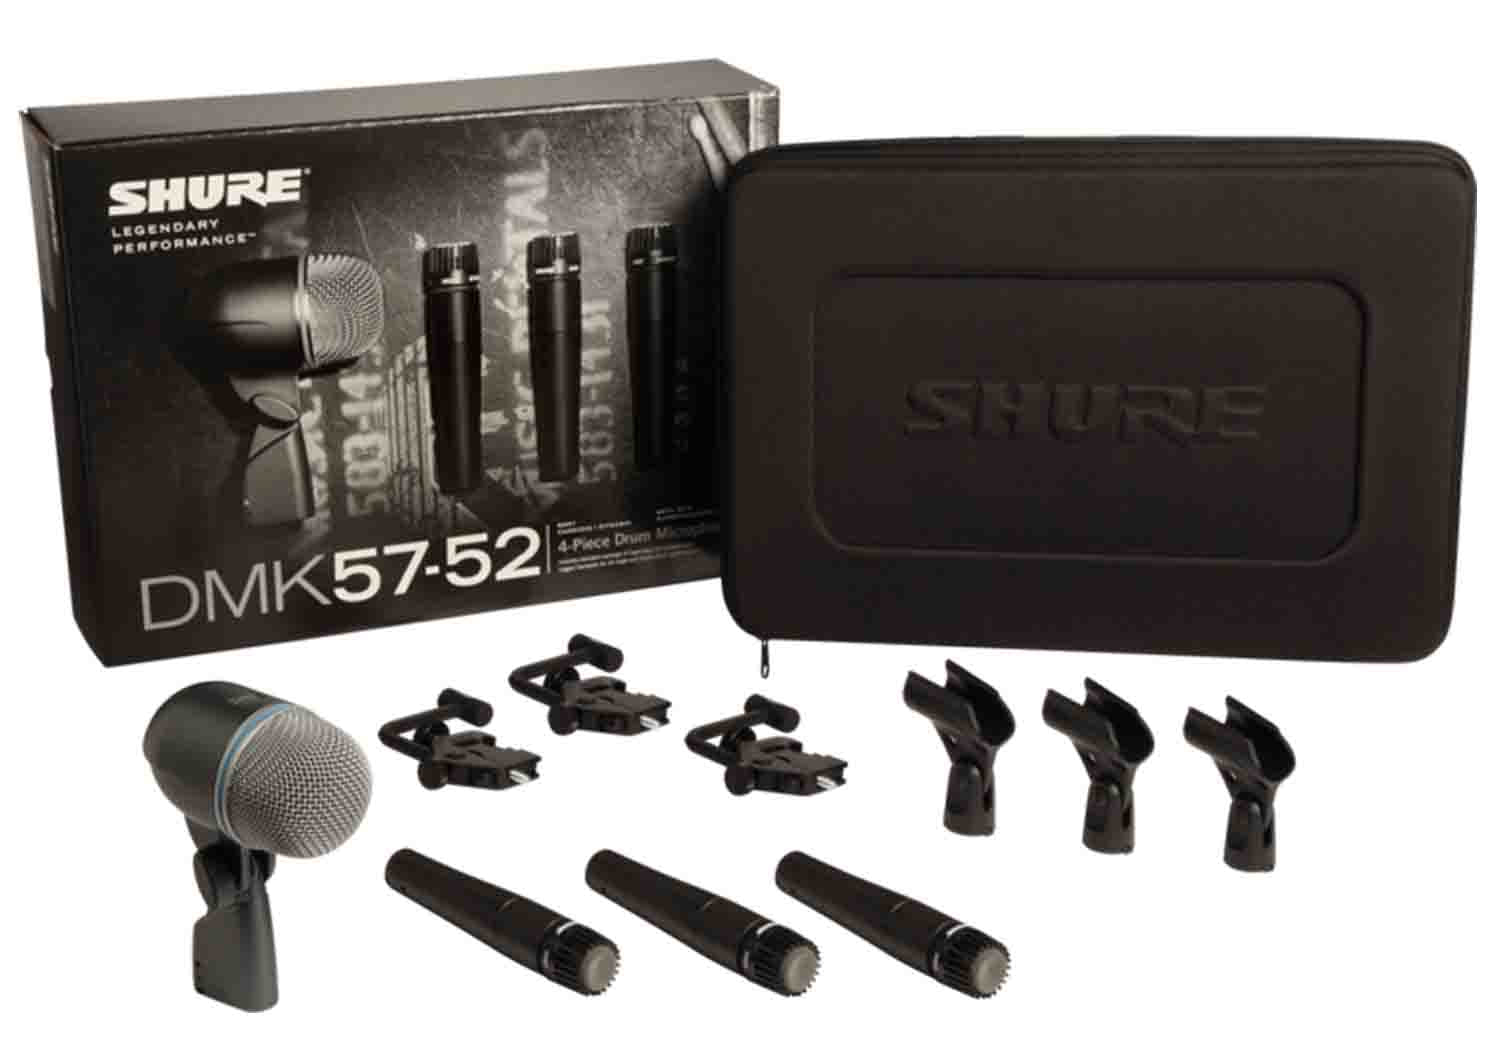 Shure DMK57-52 Drum Microphone Kit - Hollywood DJ